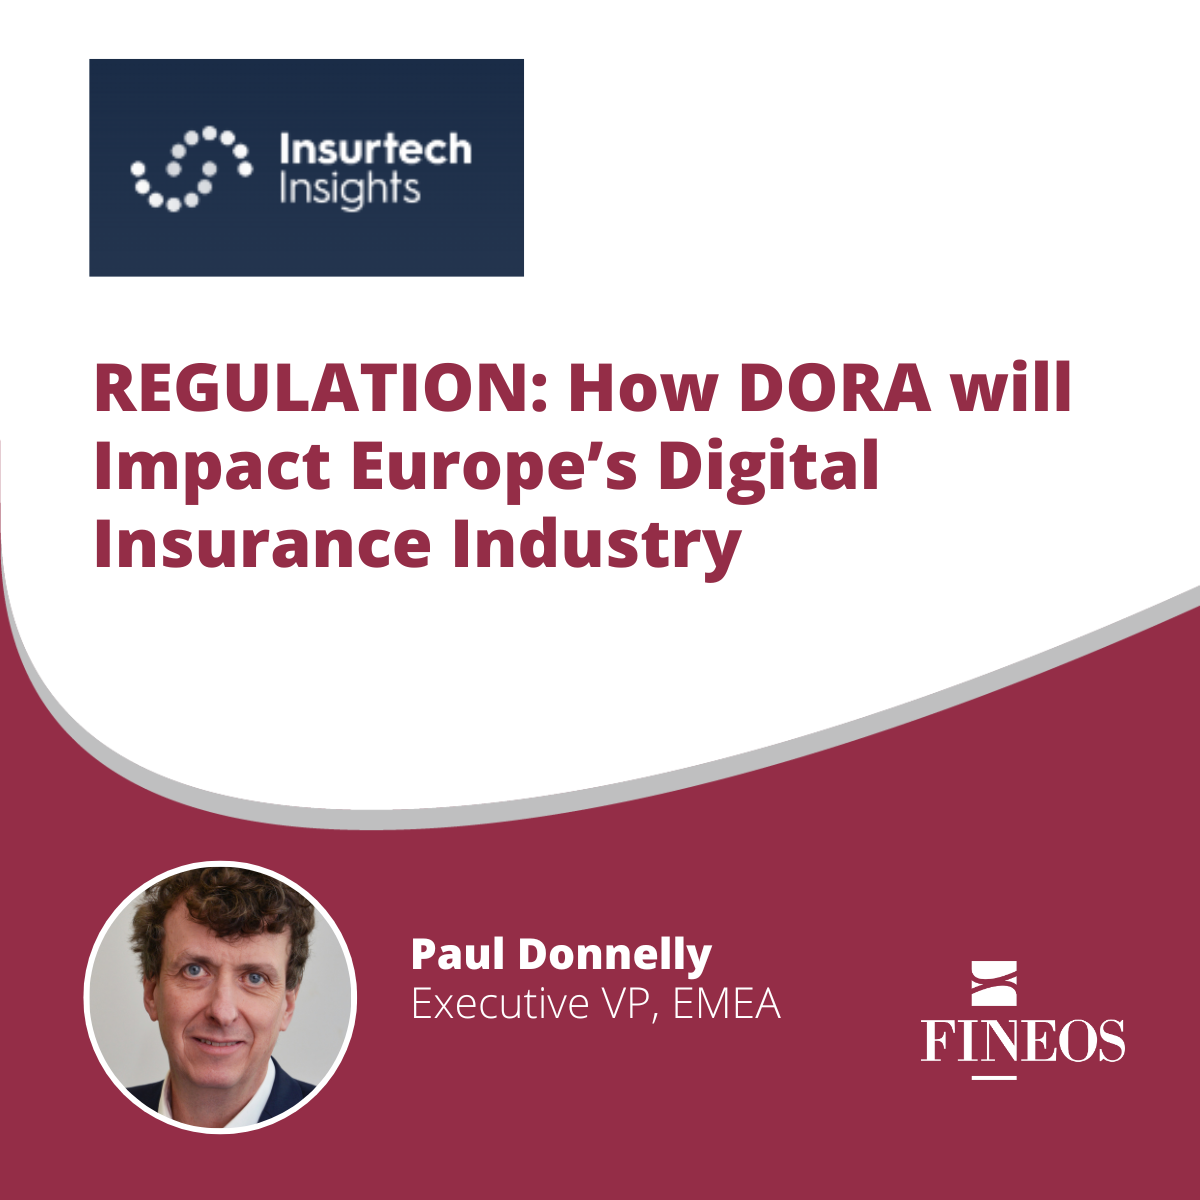 How DORA will Impact Europe’s Digital Insurance Industry